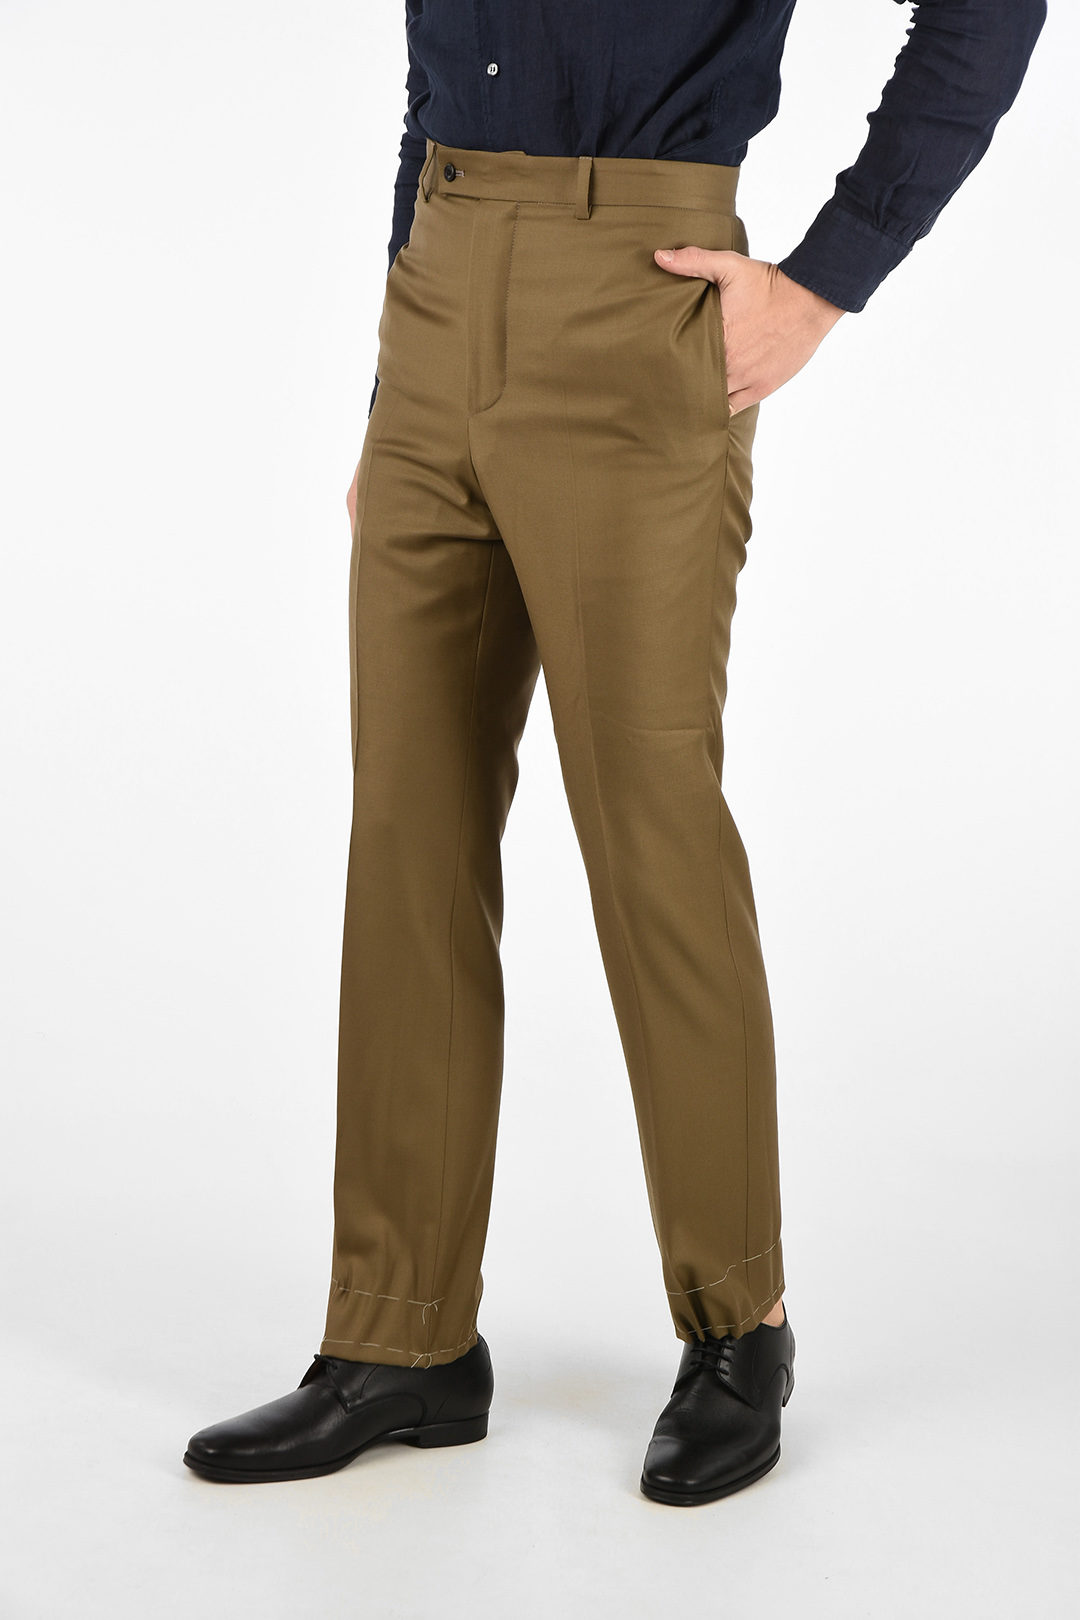 Buy Tan Trousers  Pants for Men by PARK AVENUE Online  Ajiocom